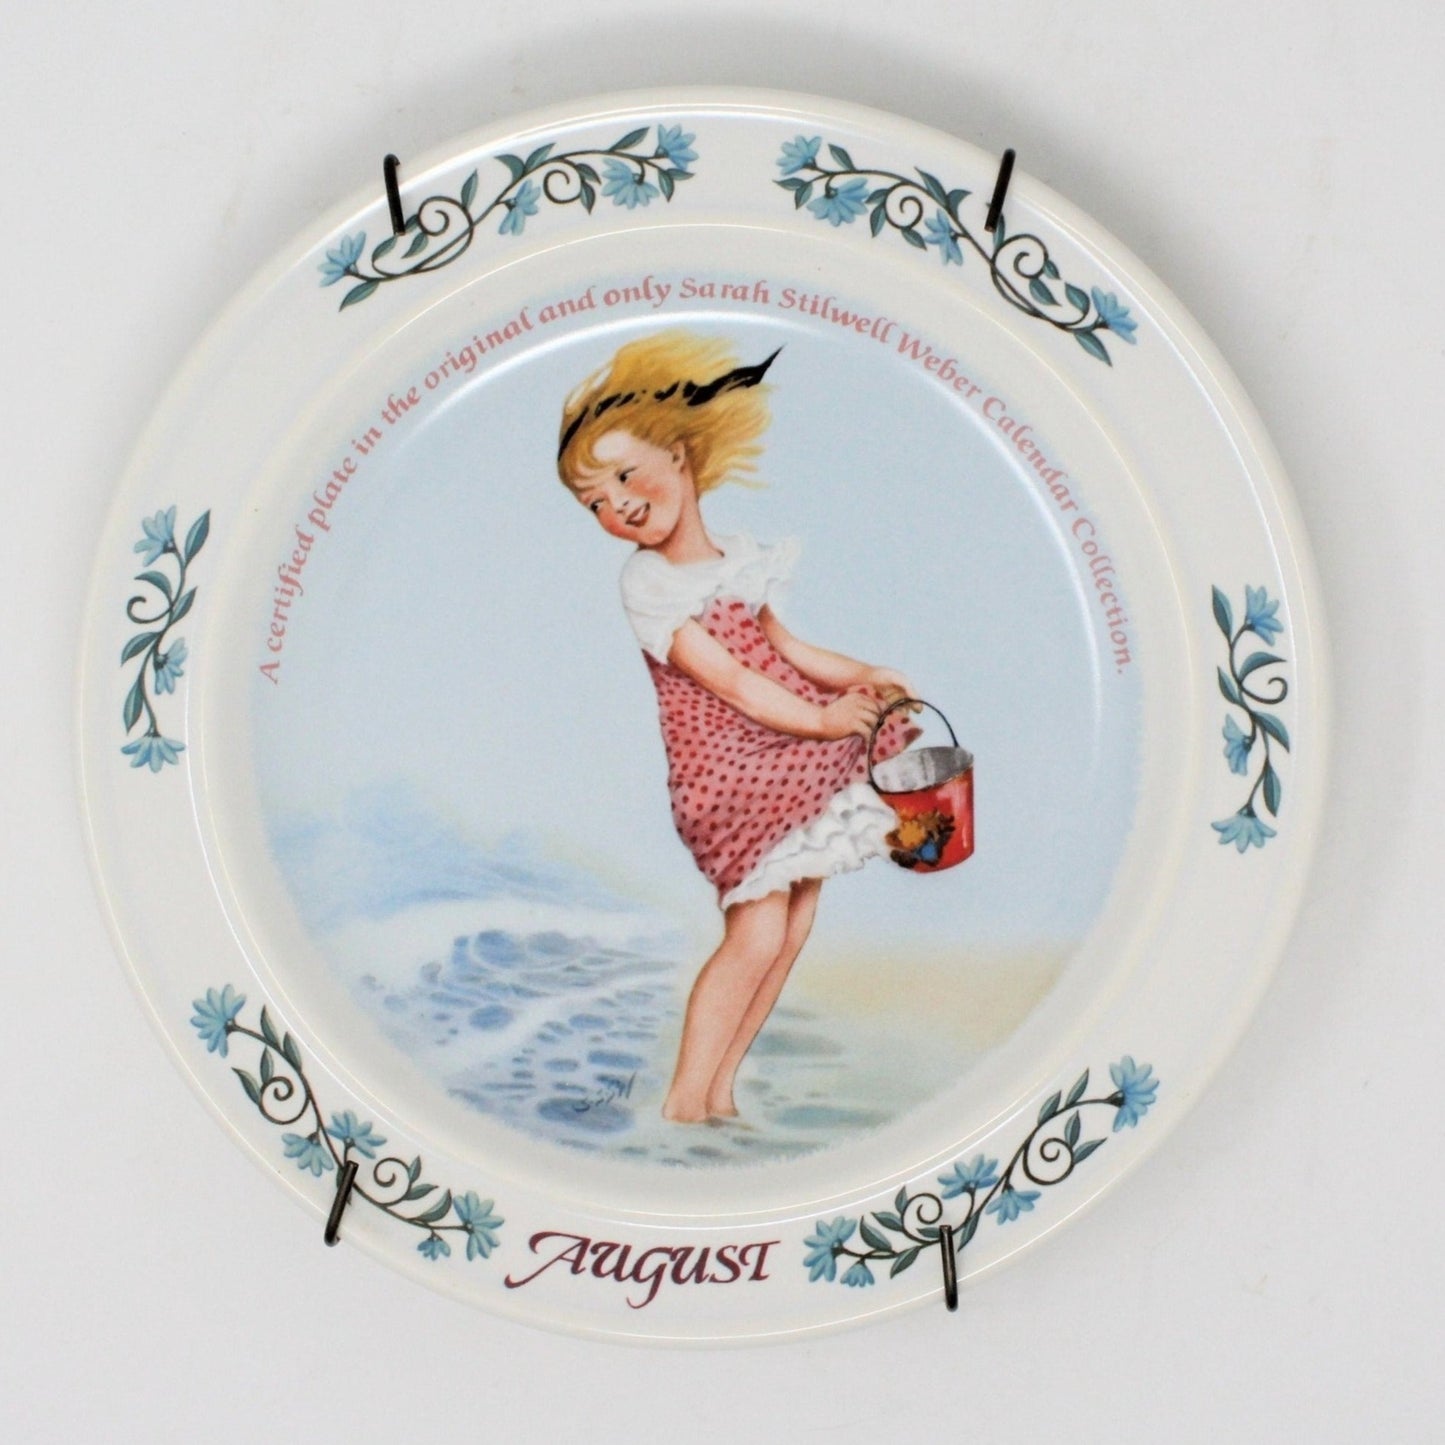 Decorative Plate, August by Sarah Stilwell Weber, Calendar Collection, Vintage 1984